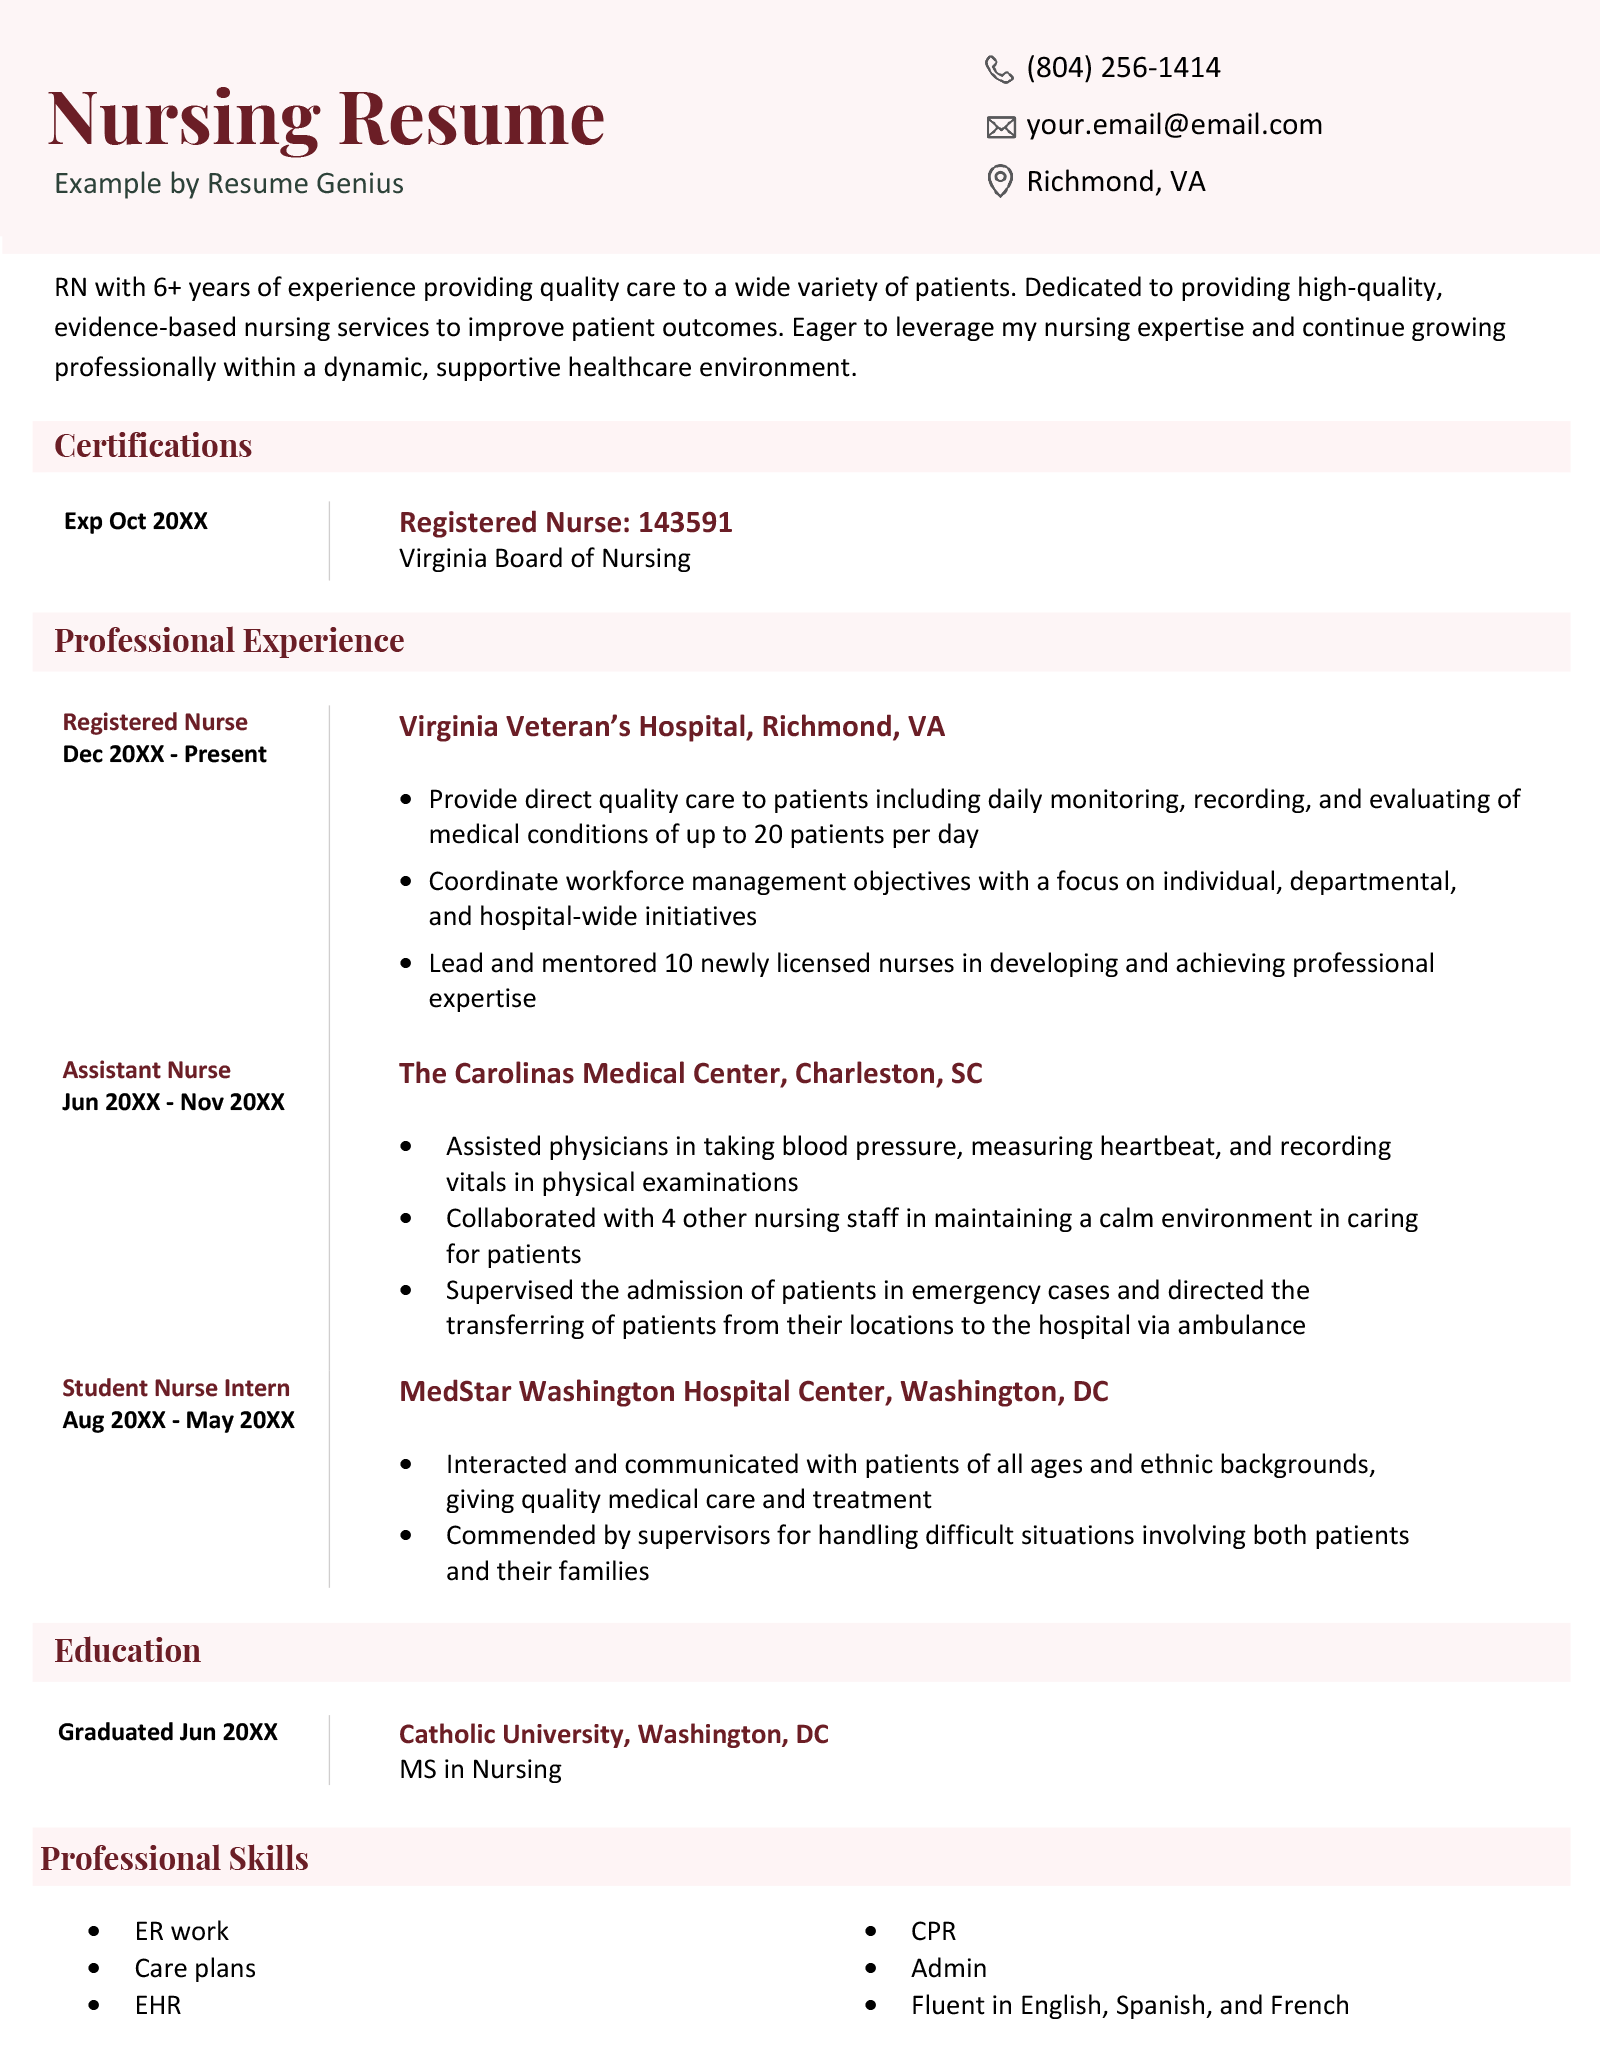 A registered nurse (RN) resume example